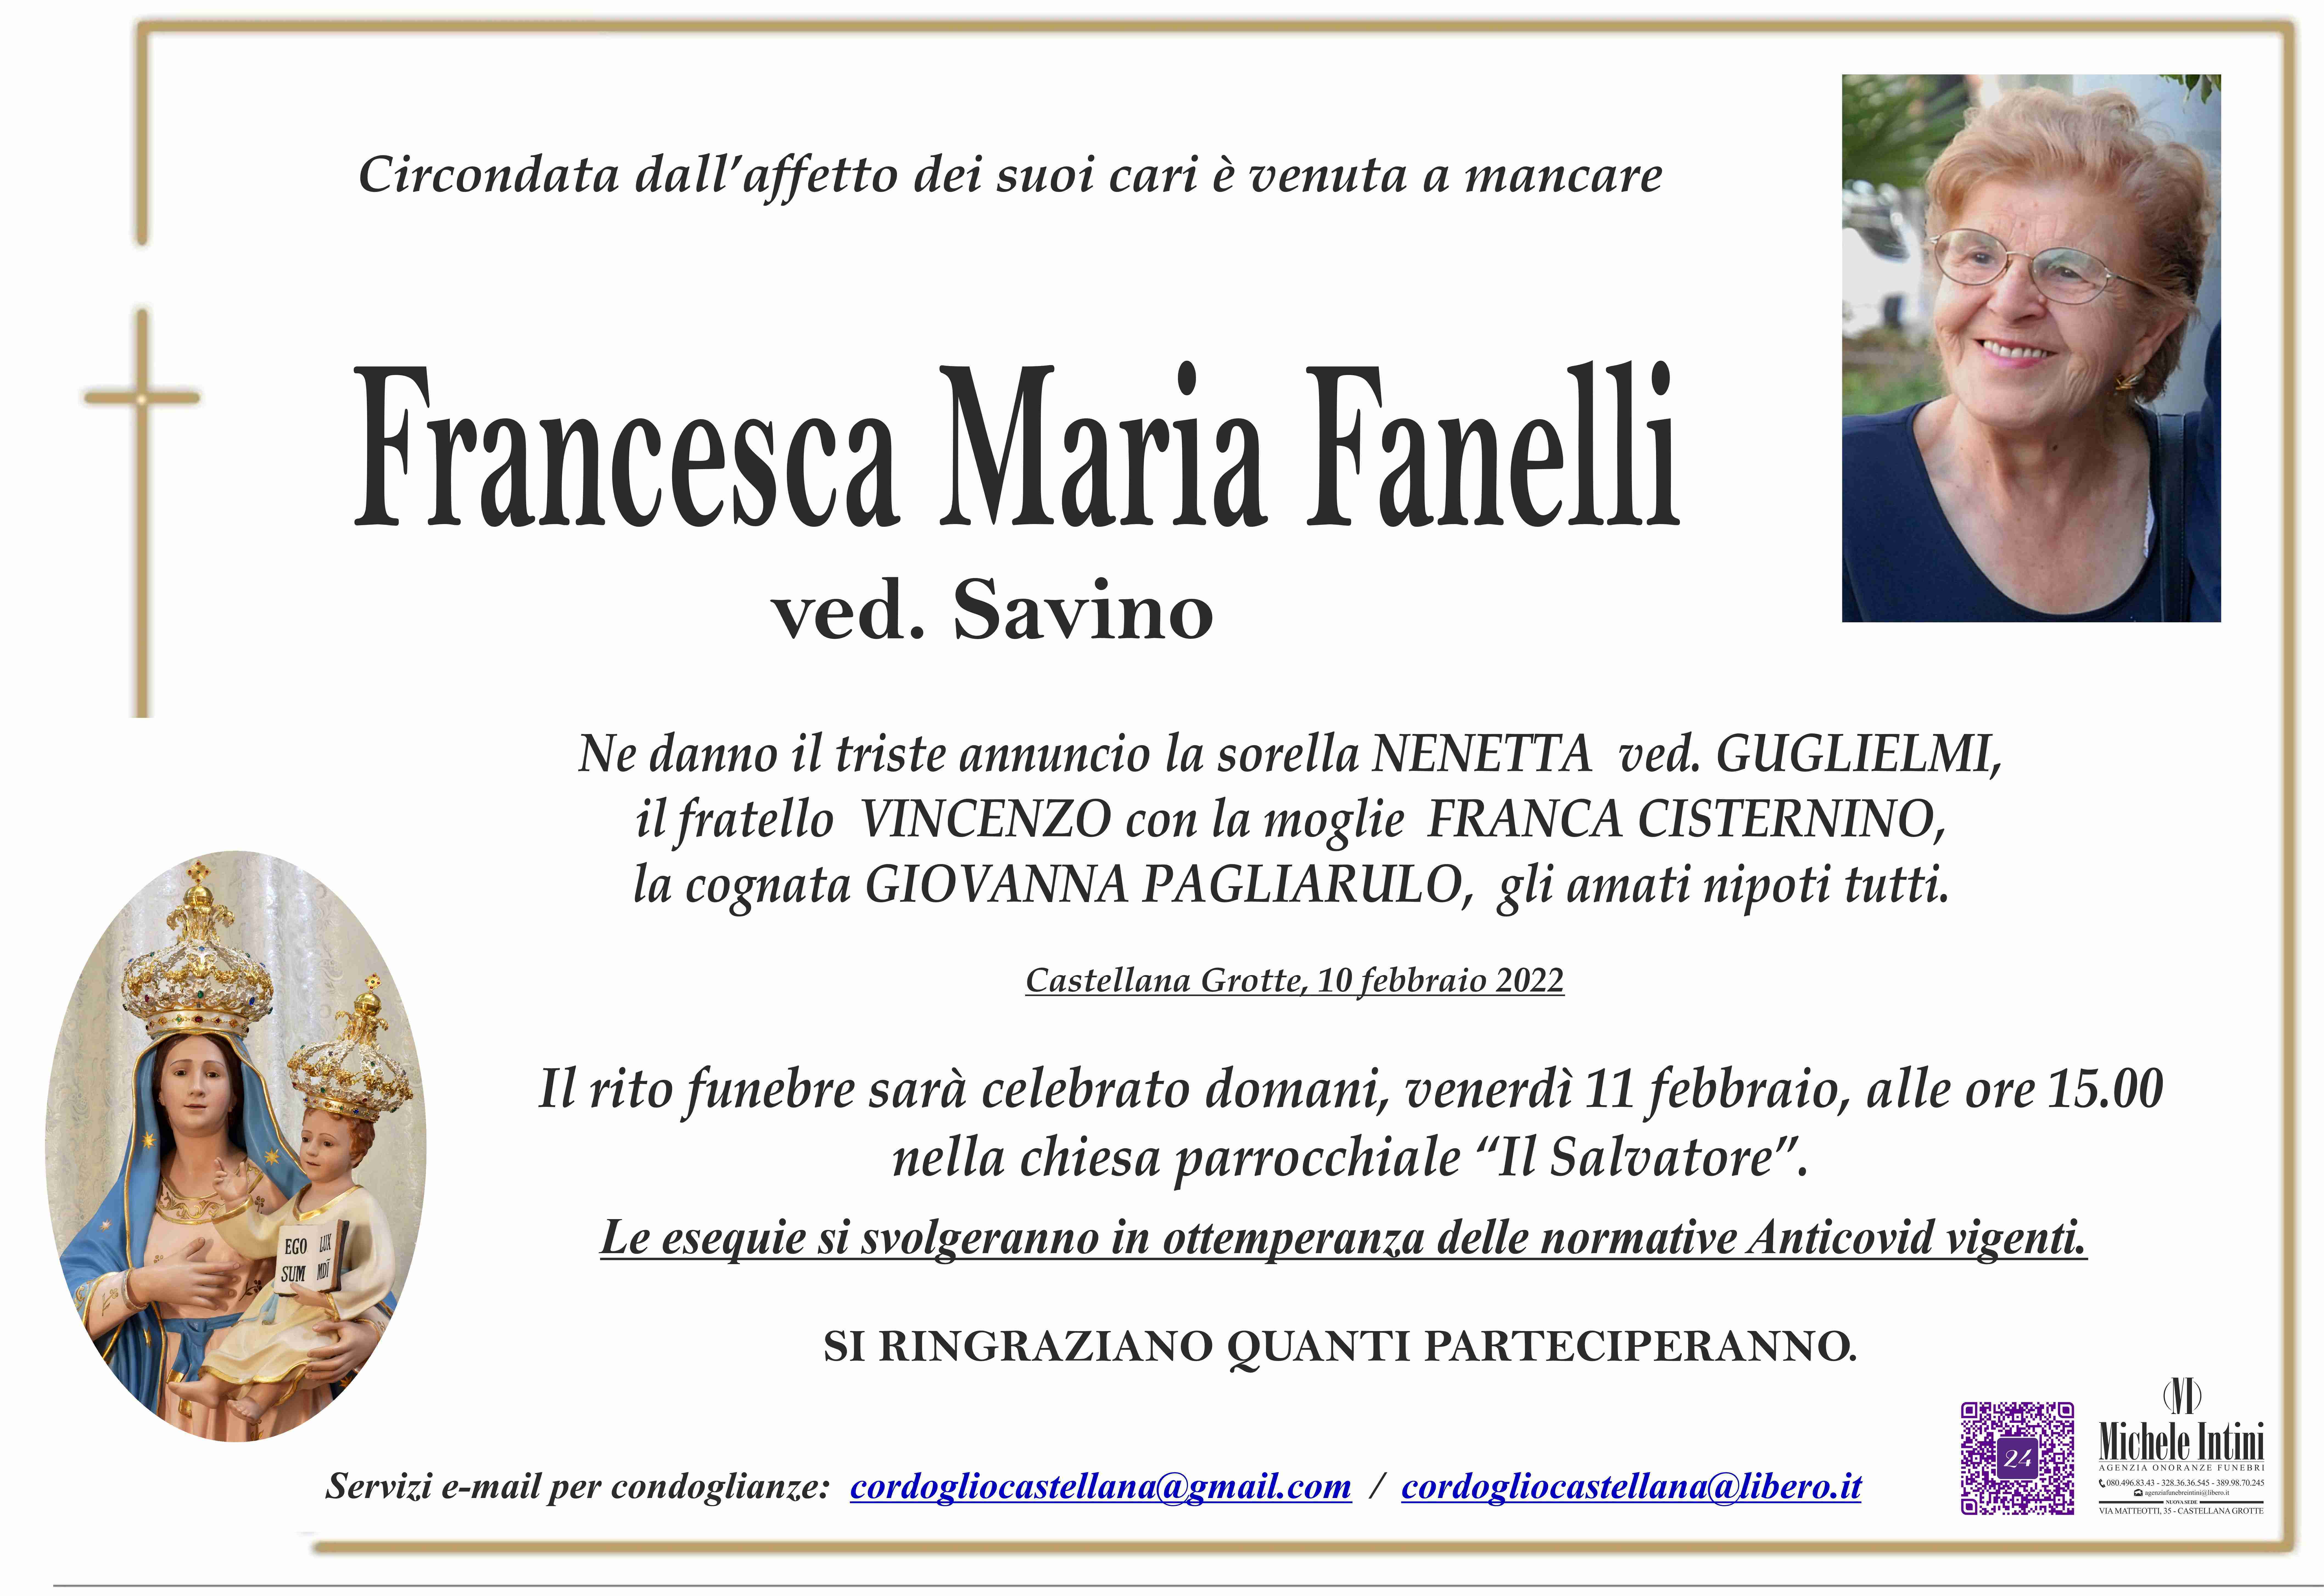 Francesca Maria Fanelli